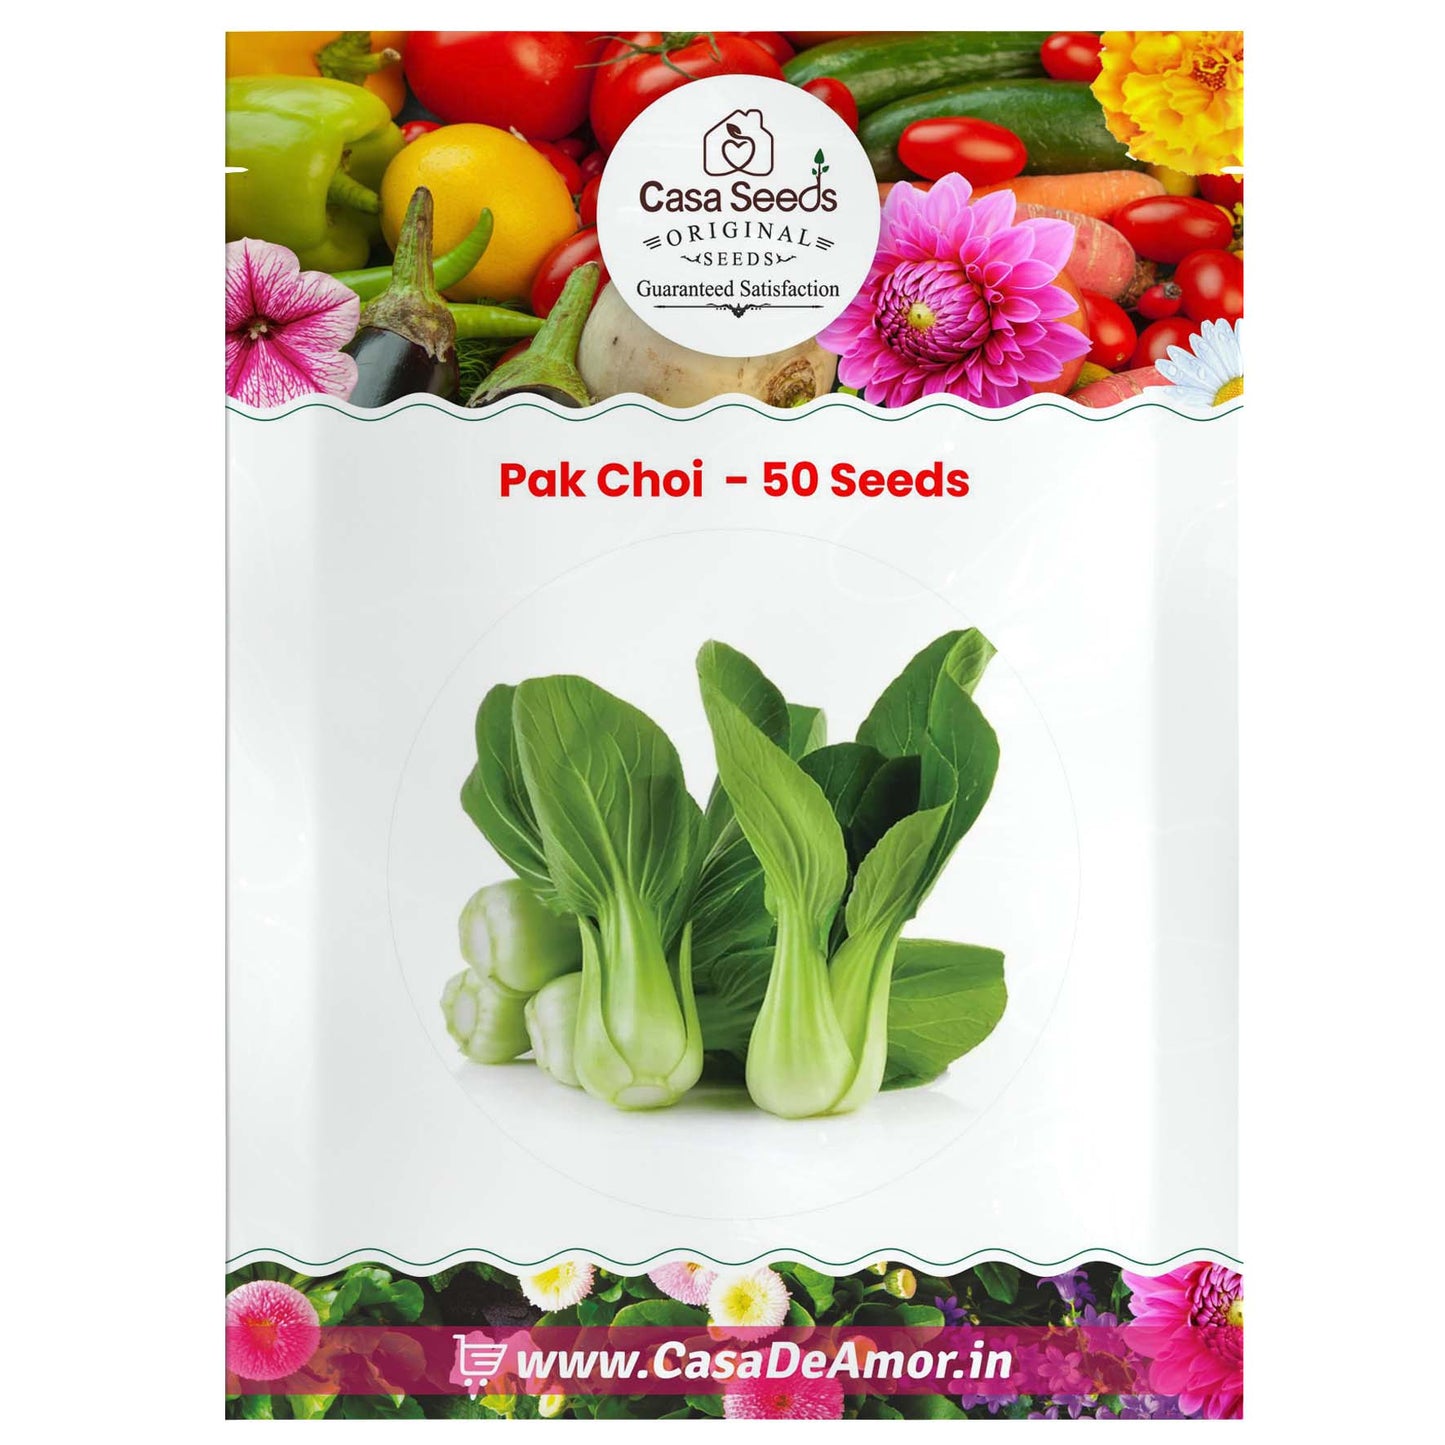 Pak Choi - 50 Seeds